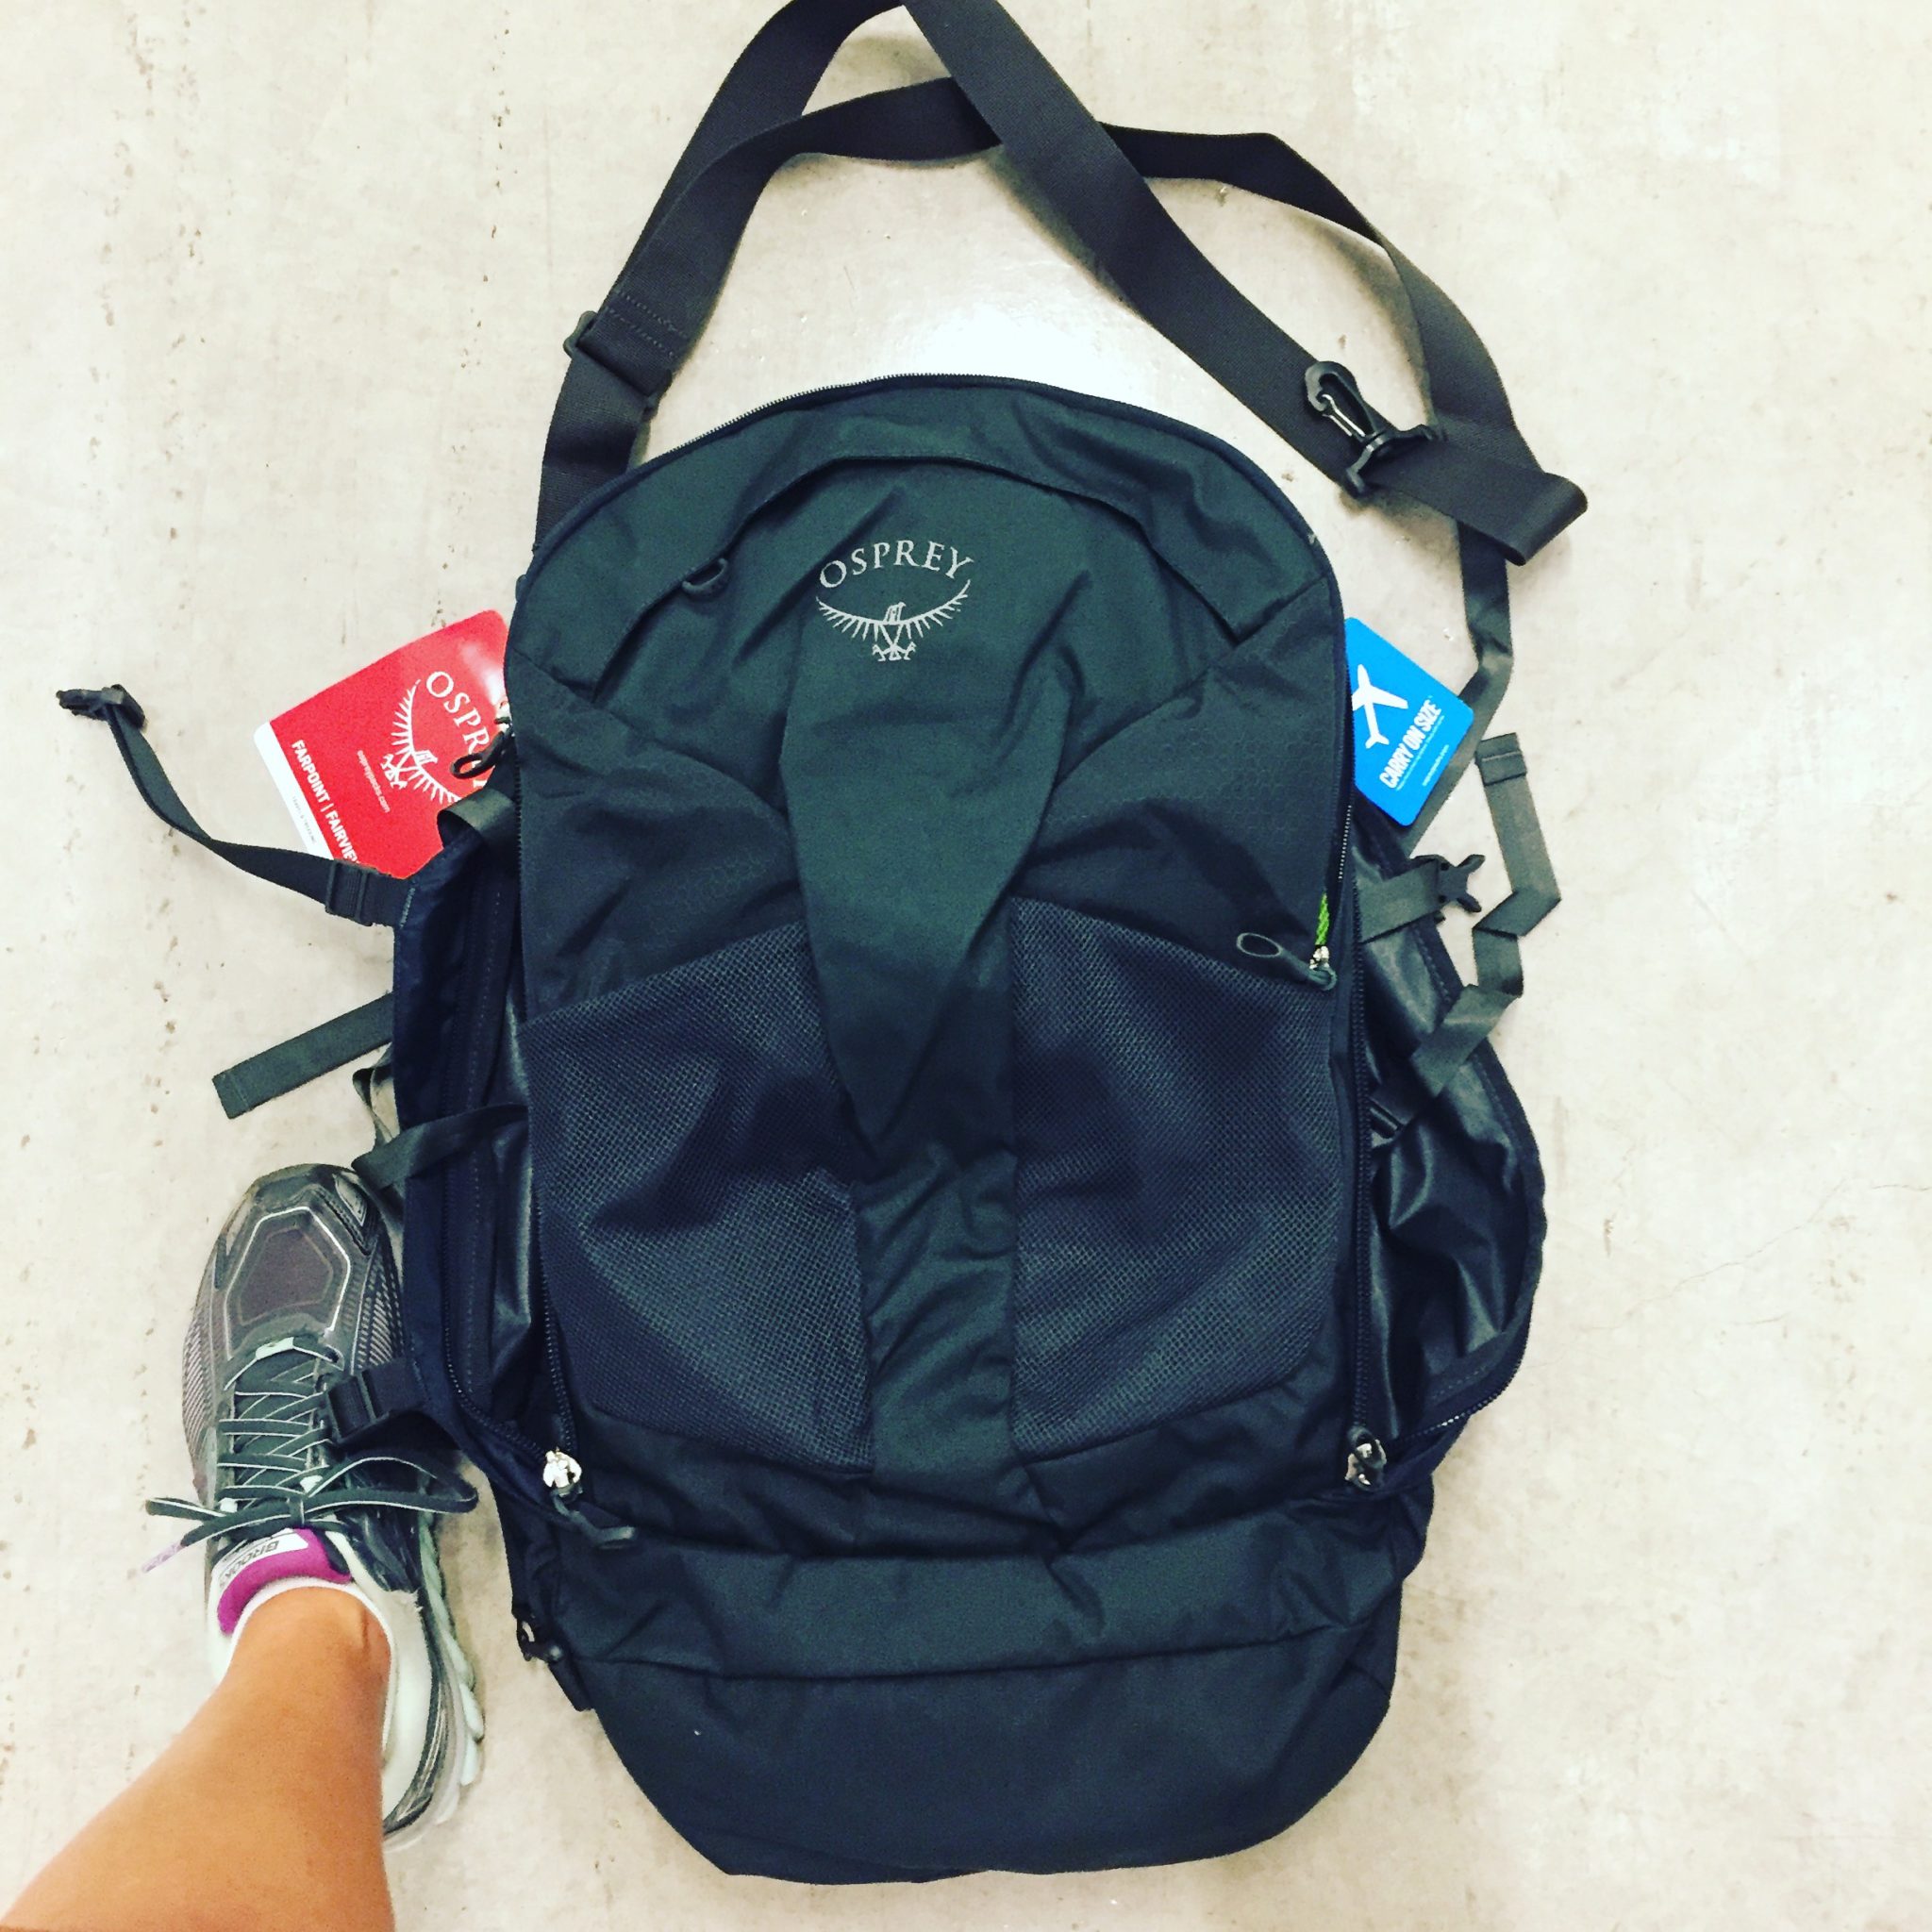 traveling bag full of travel essentials